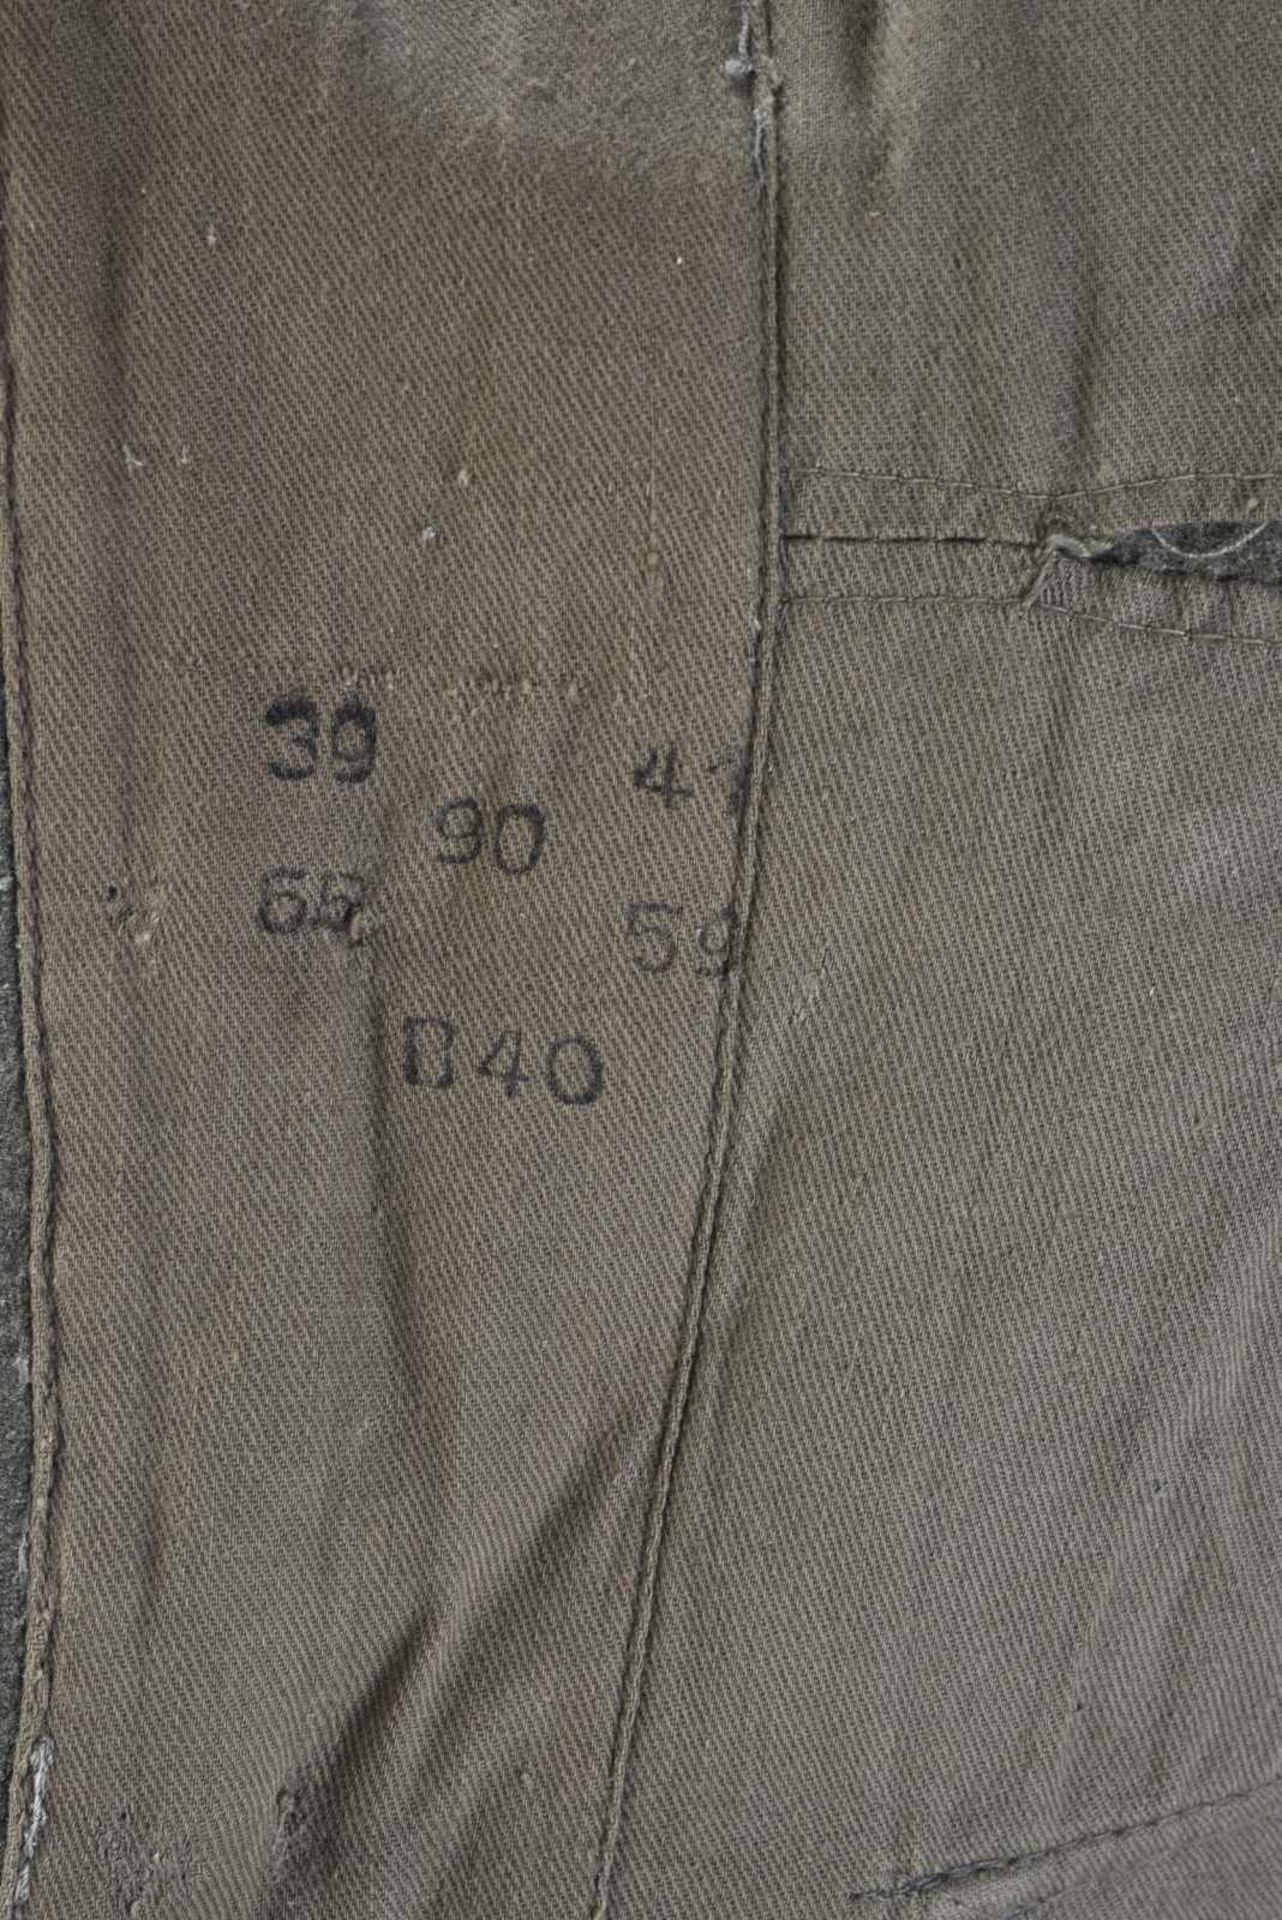 Vareuse de Feldwebel dinfanterie modèle 36 en tissu laineux Feldgrau, tous les boutons sont - Image 2 of 4